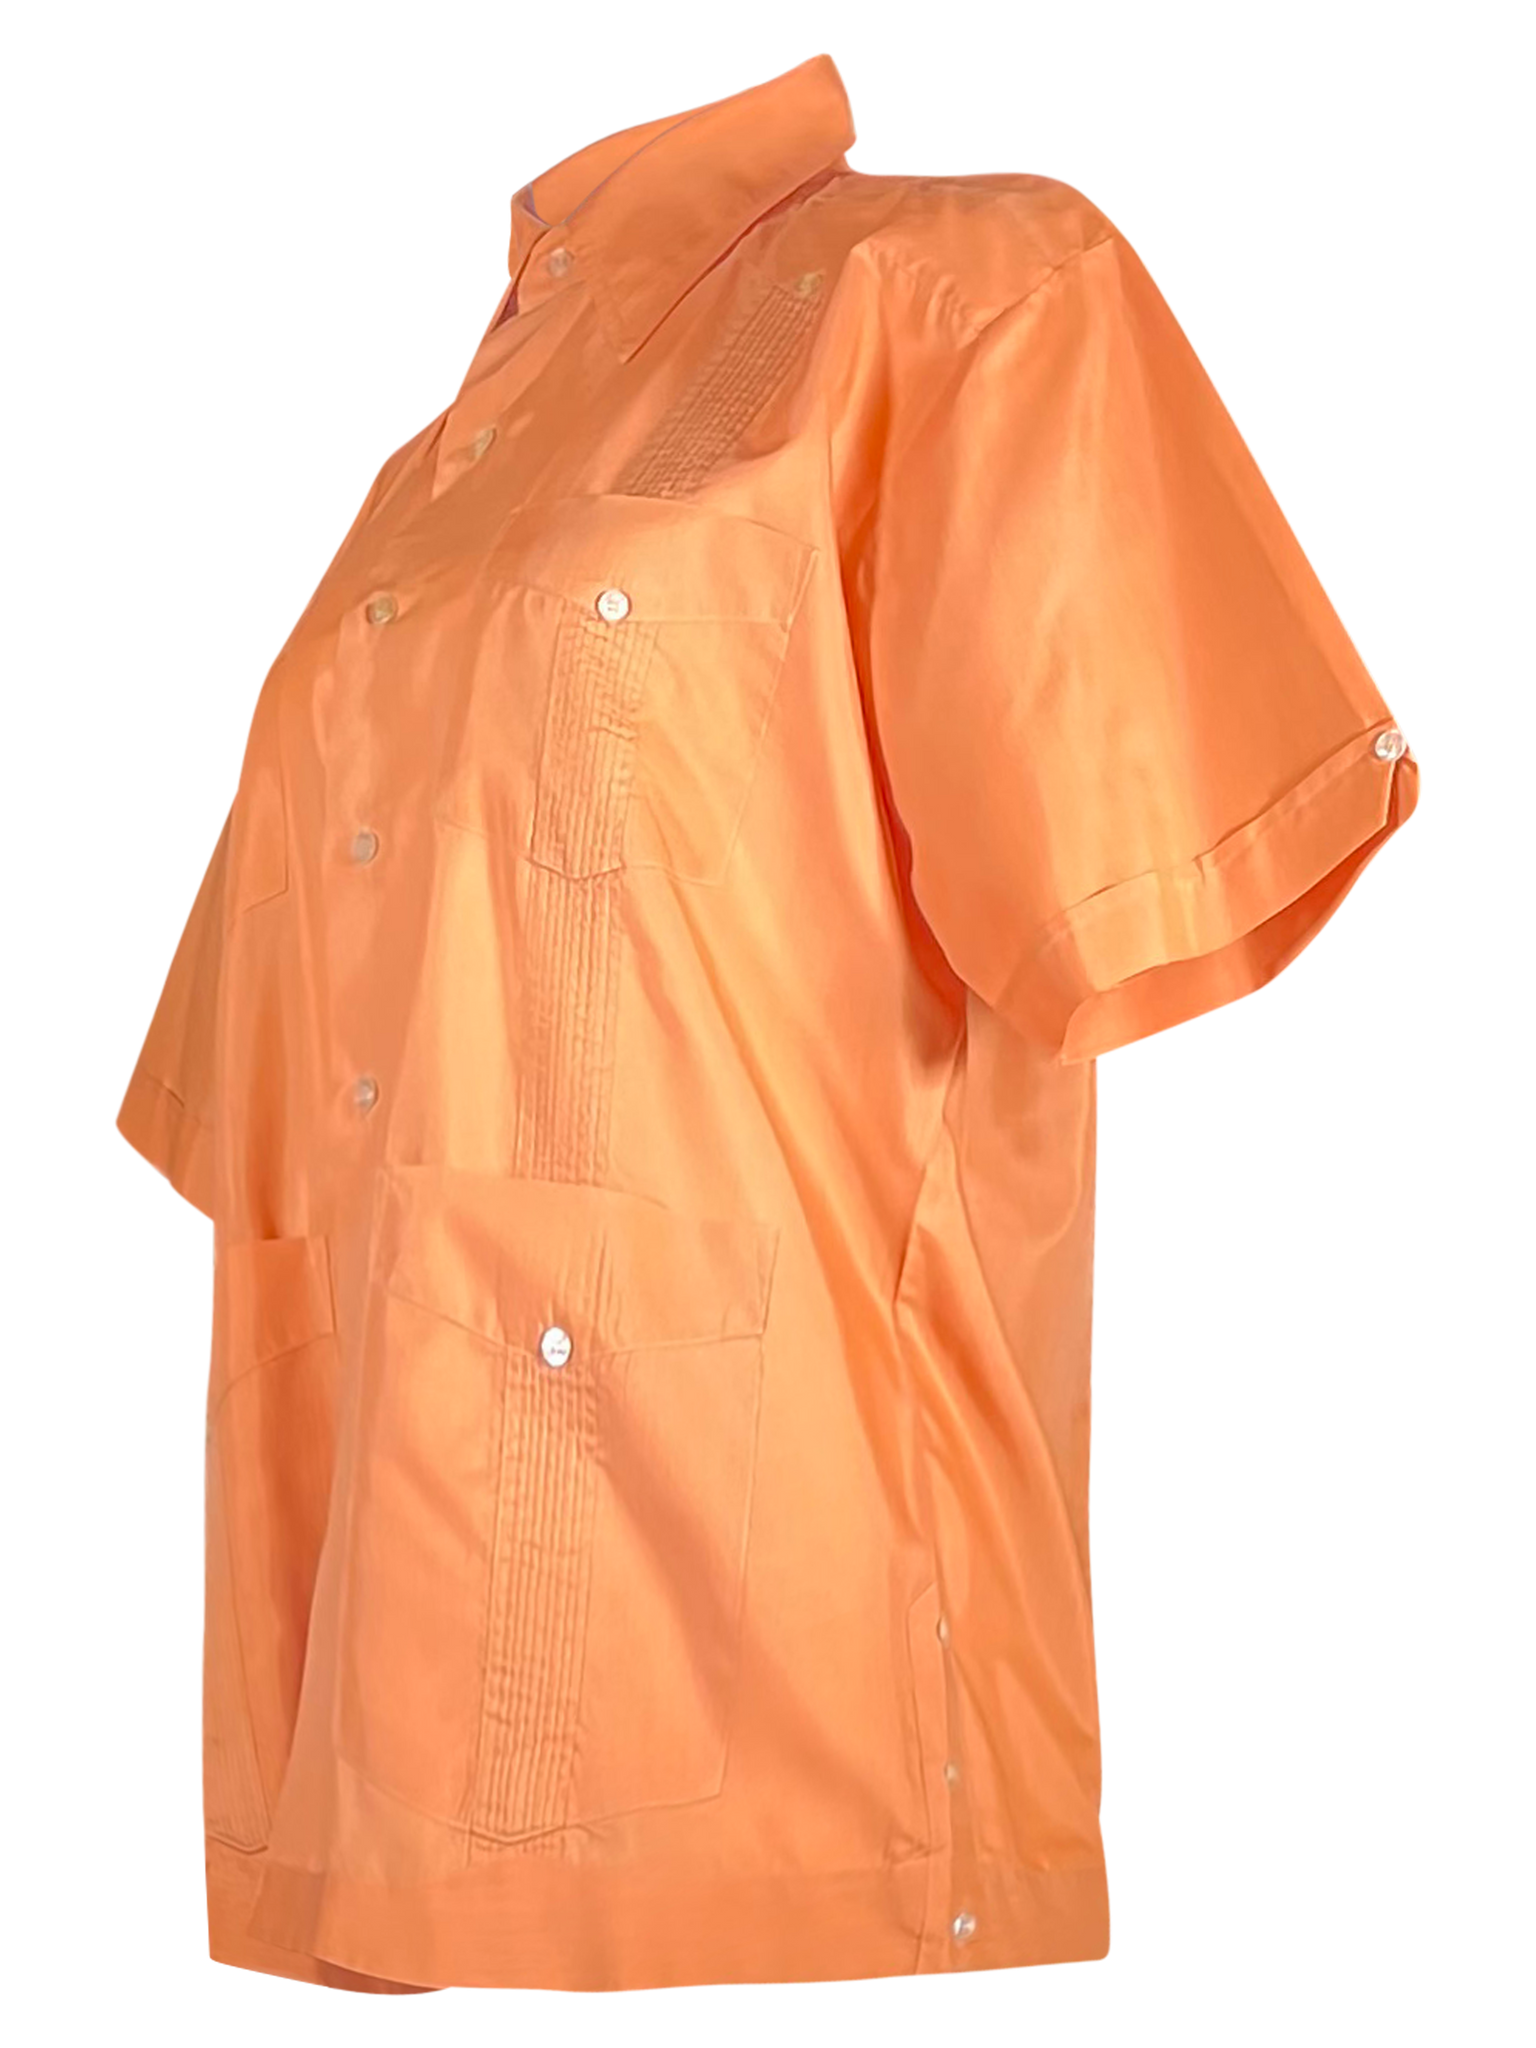 Orange Caliente Shirt